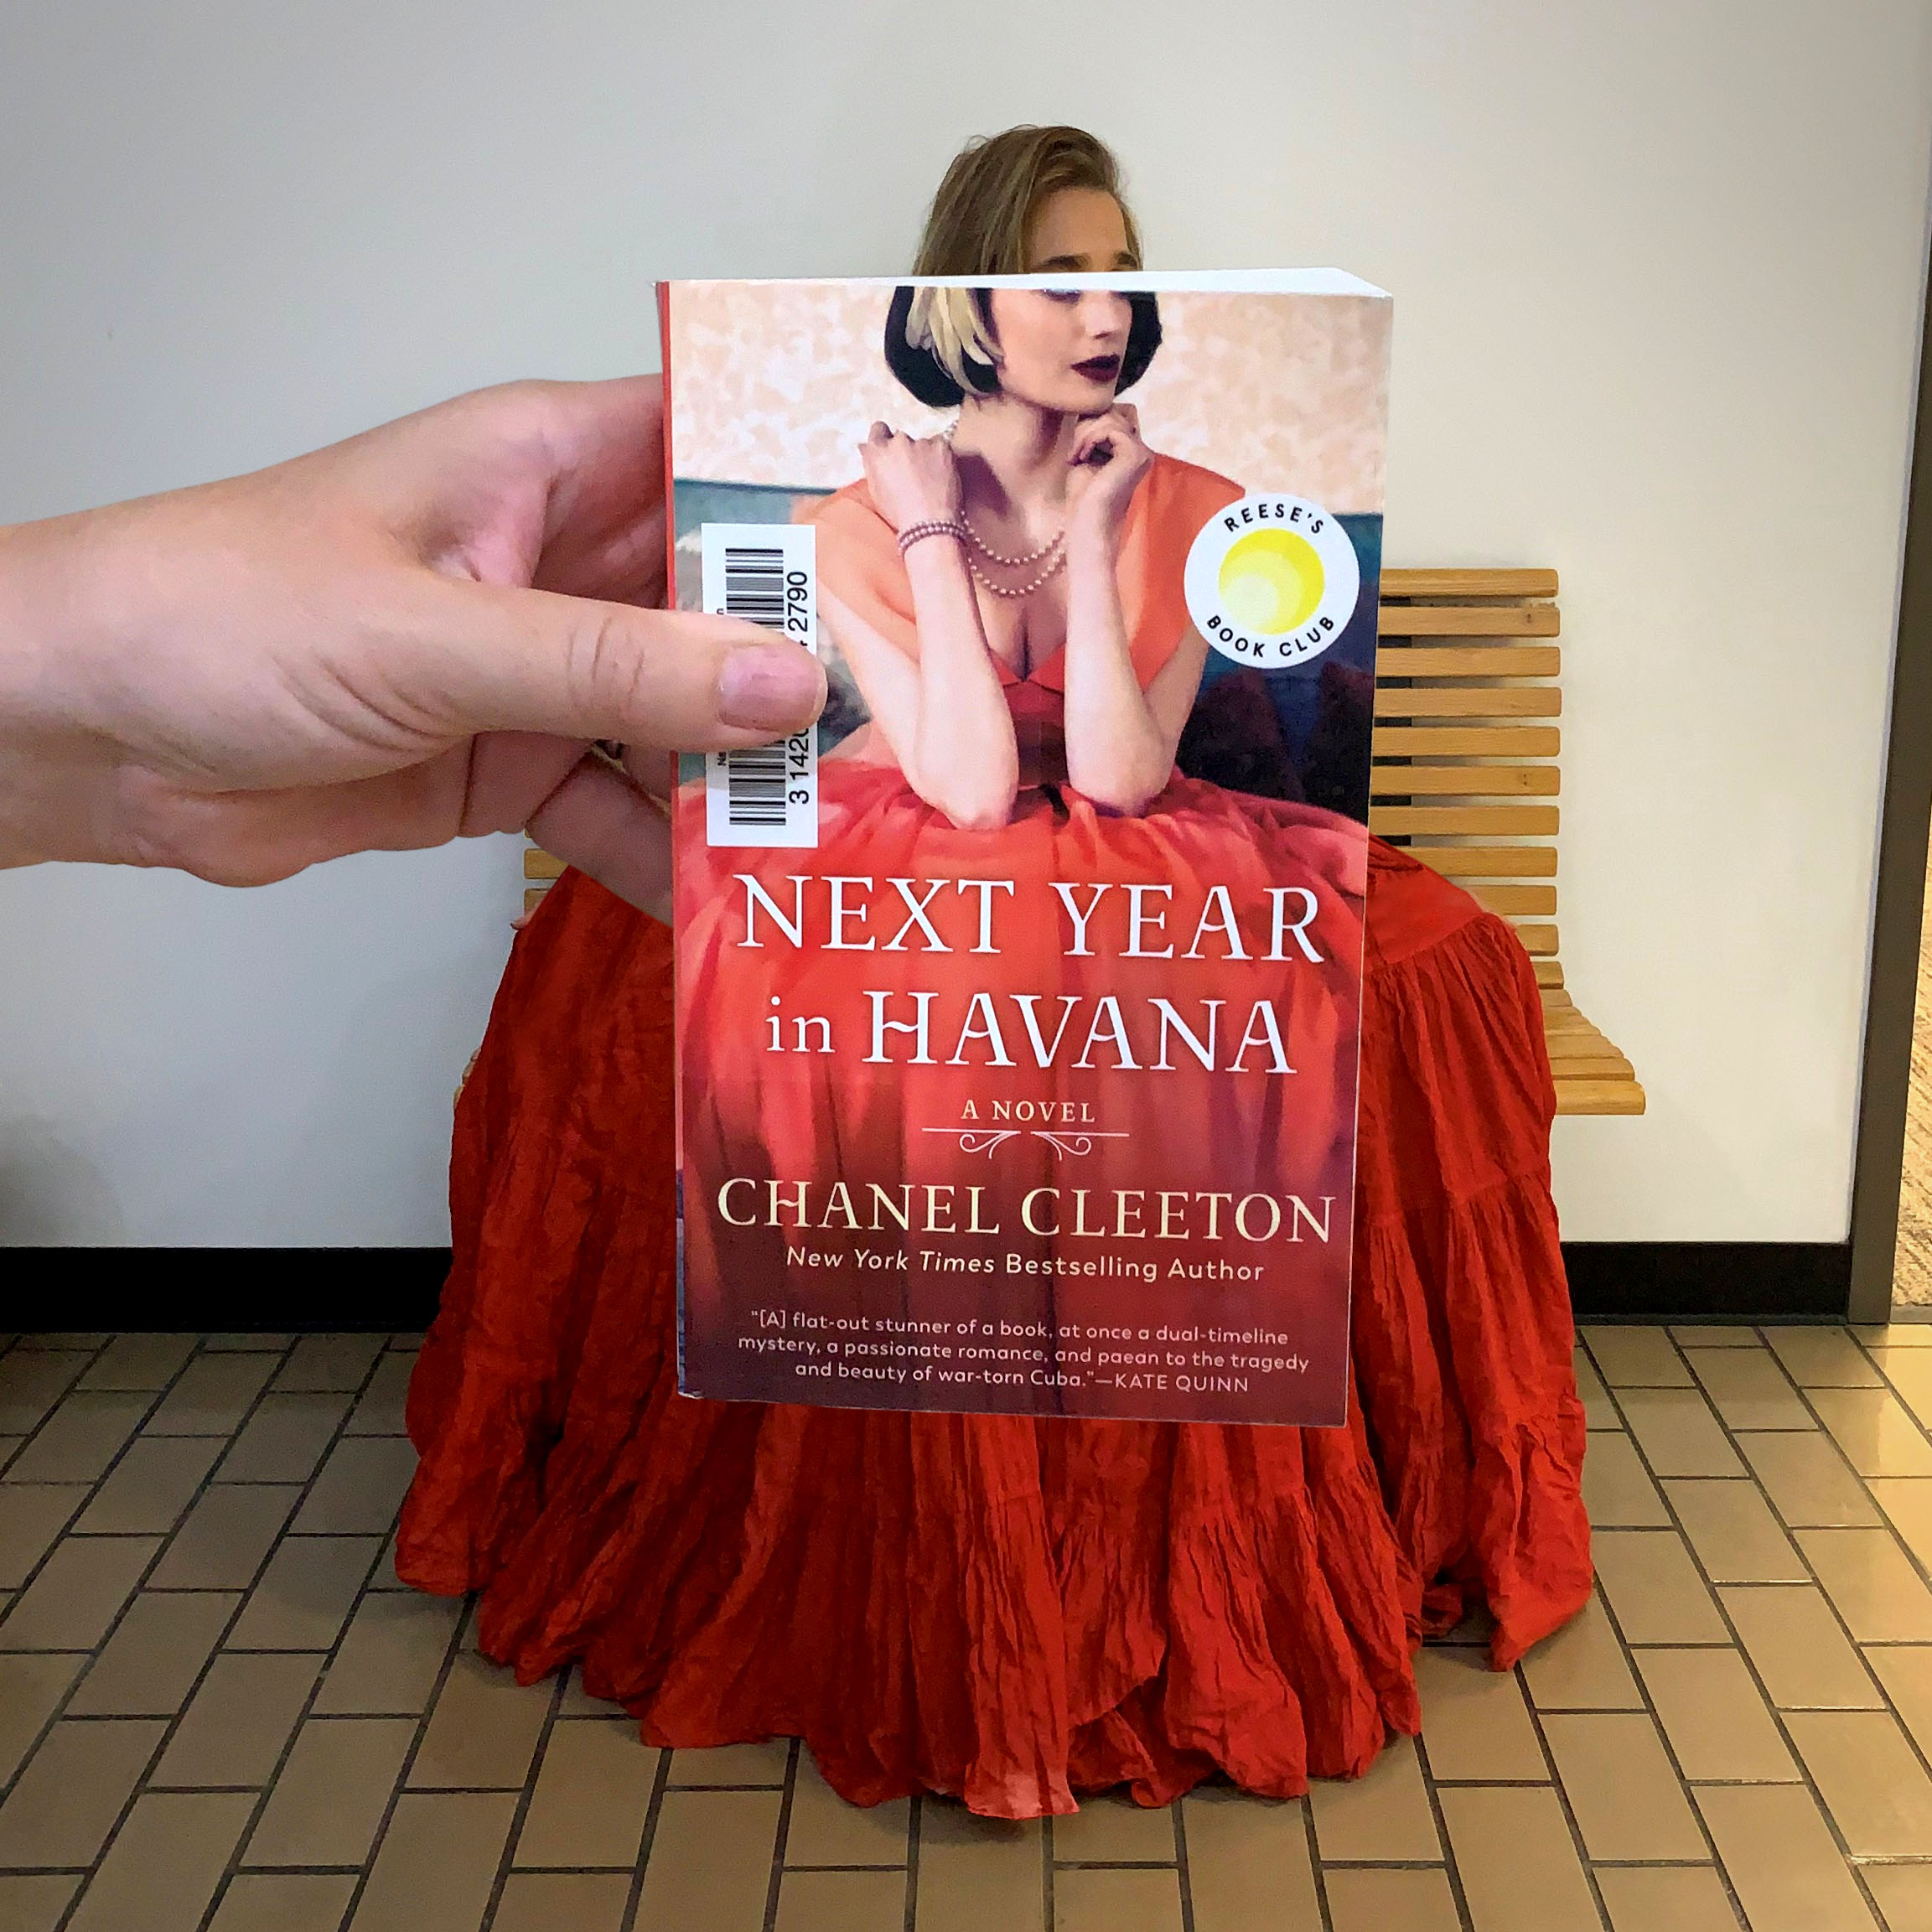 Chanel Cleeton | Nebraska Library Commission Blog